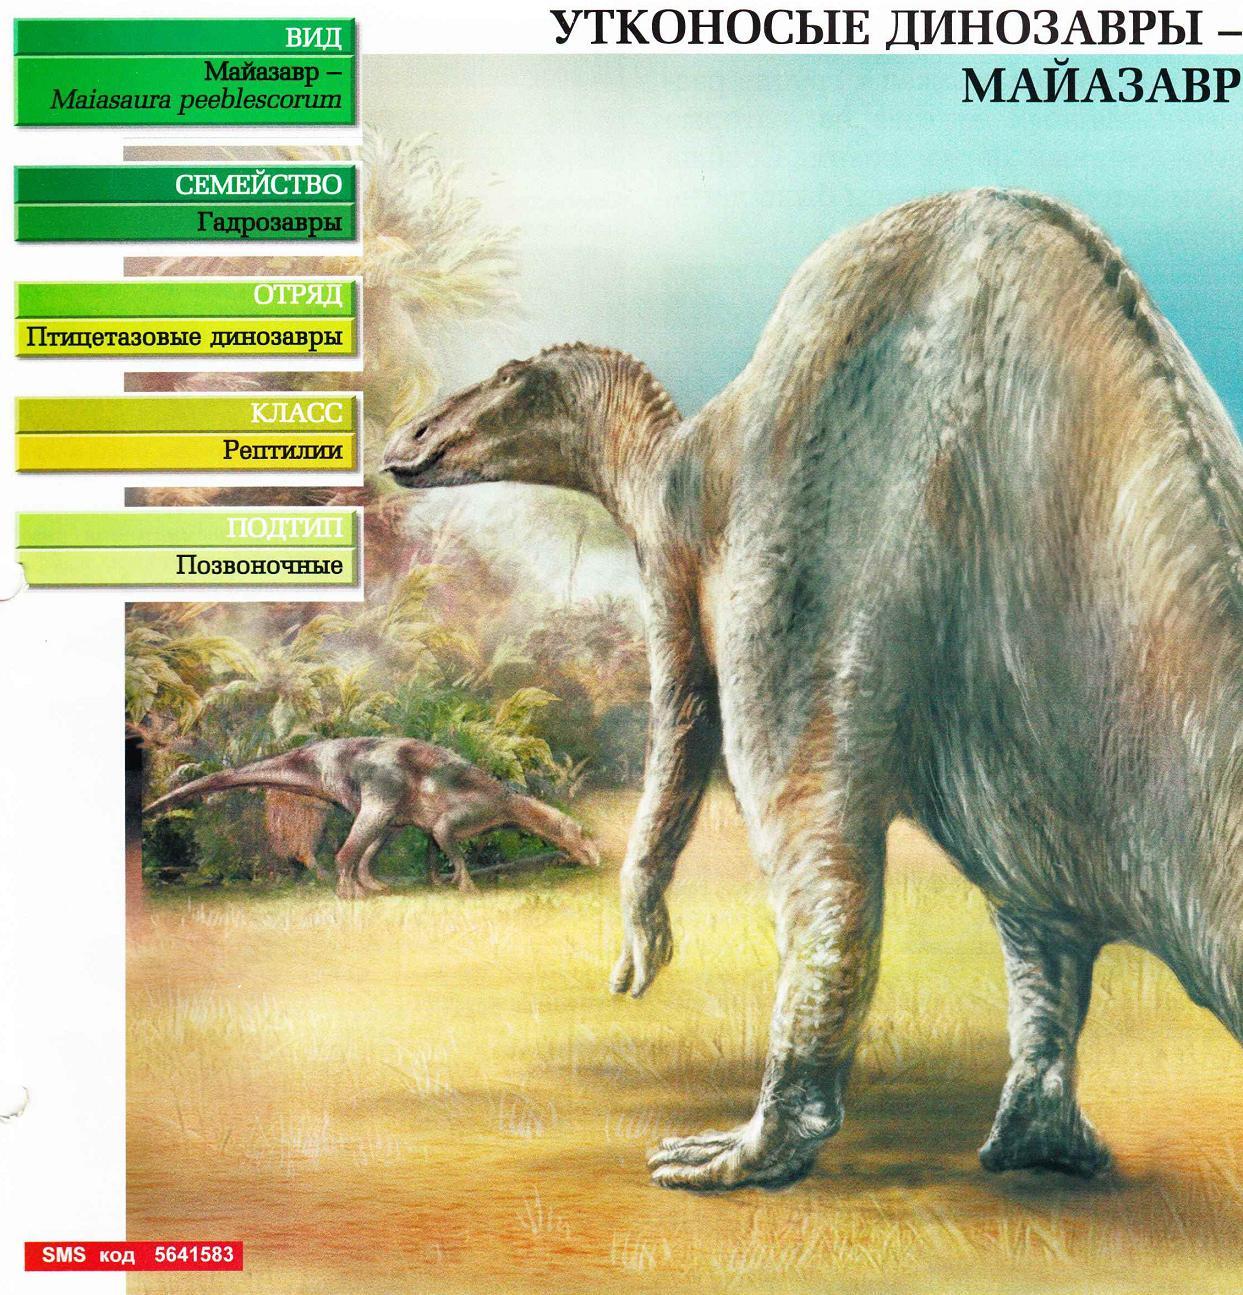 Систематика (научная классификация) майазавра. Maiasaura peeblescorum.